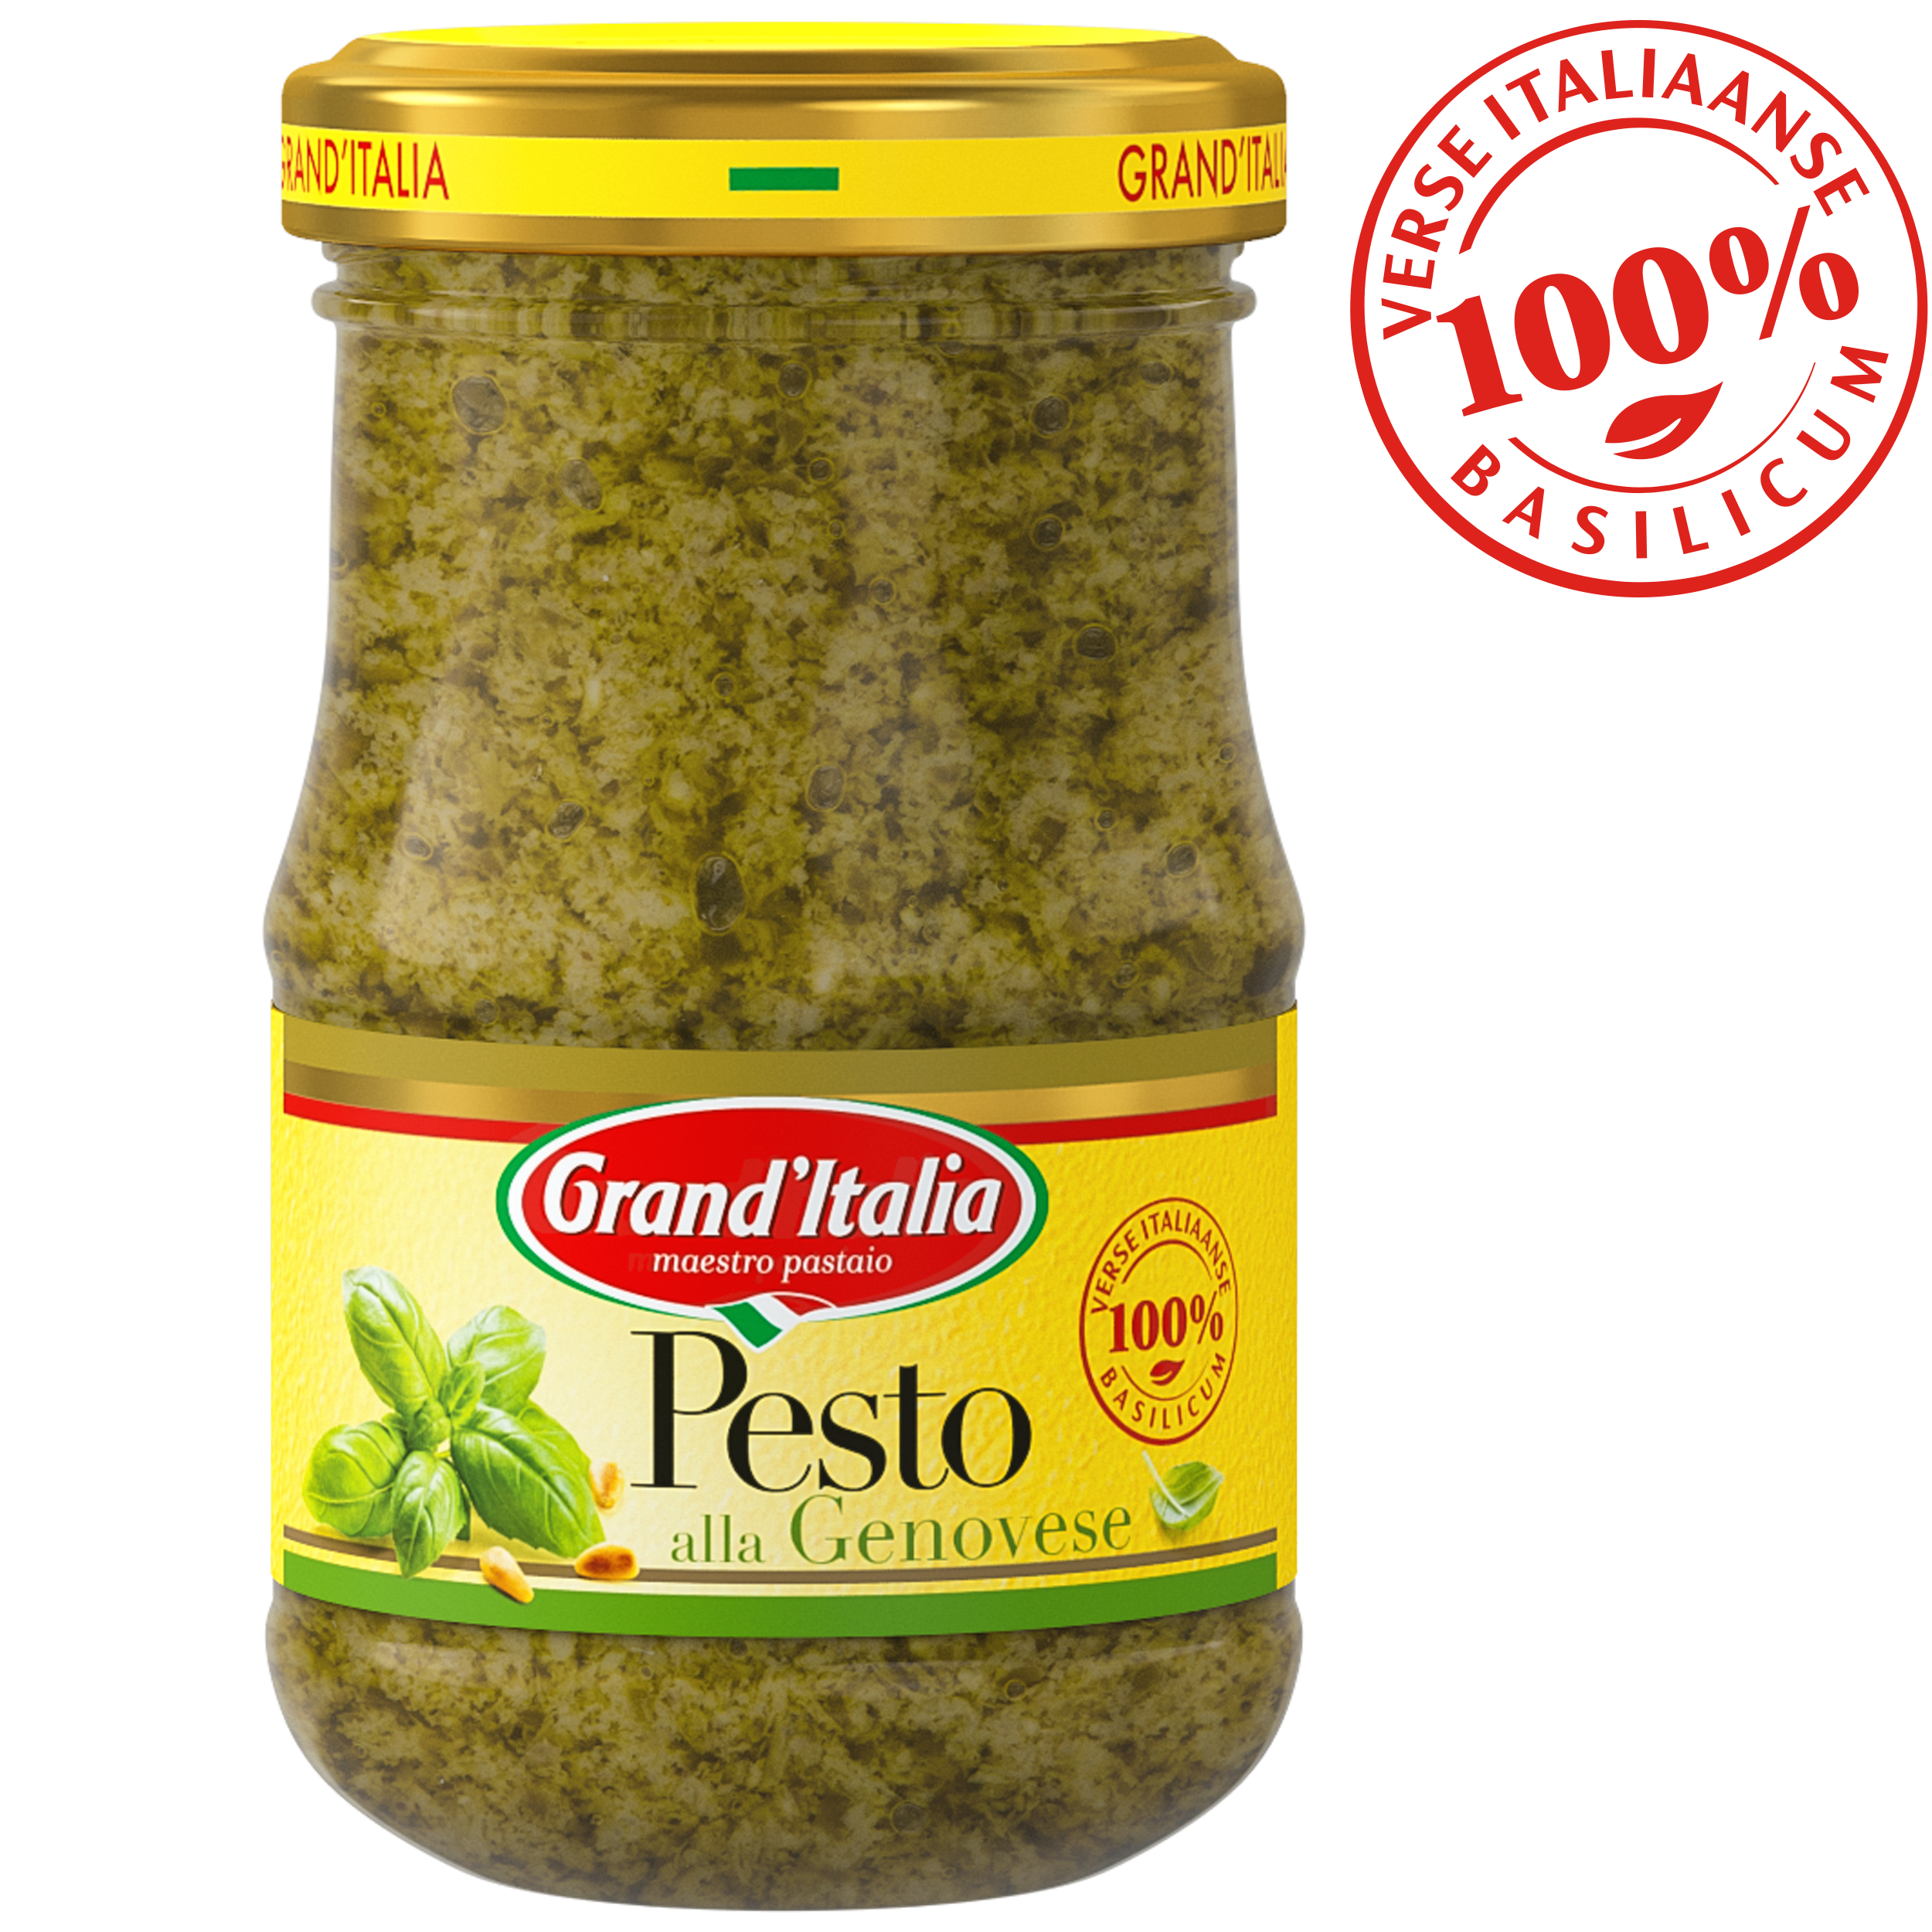 Pesto alla Genovese 90g Grand'Italia - claim